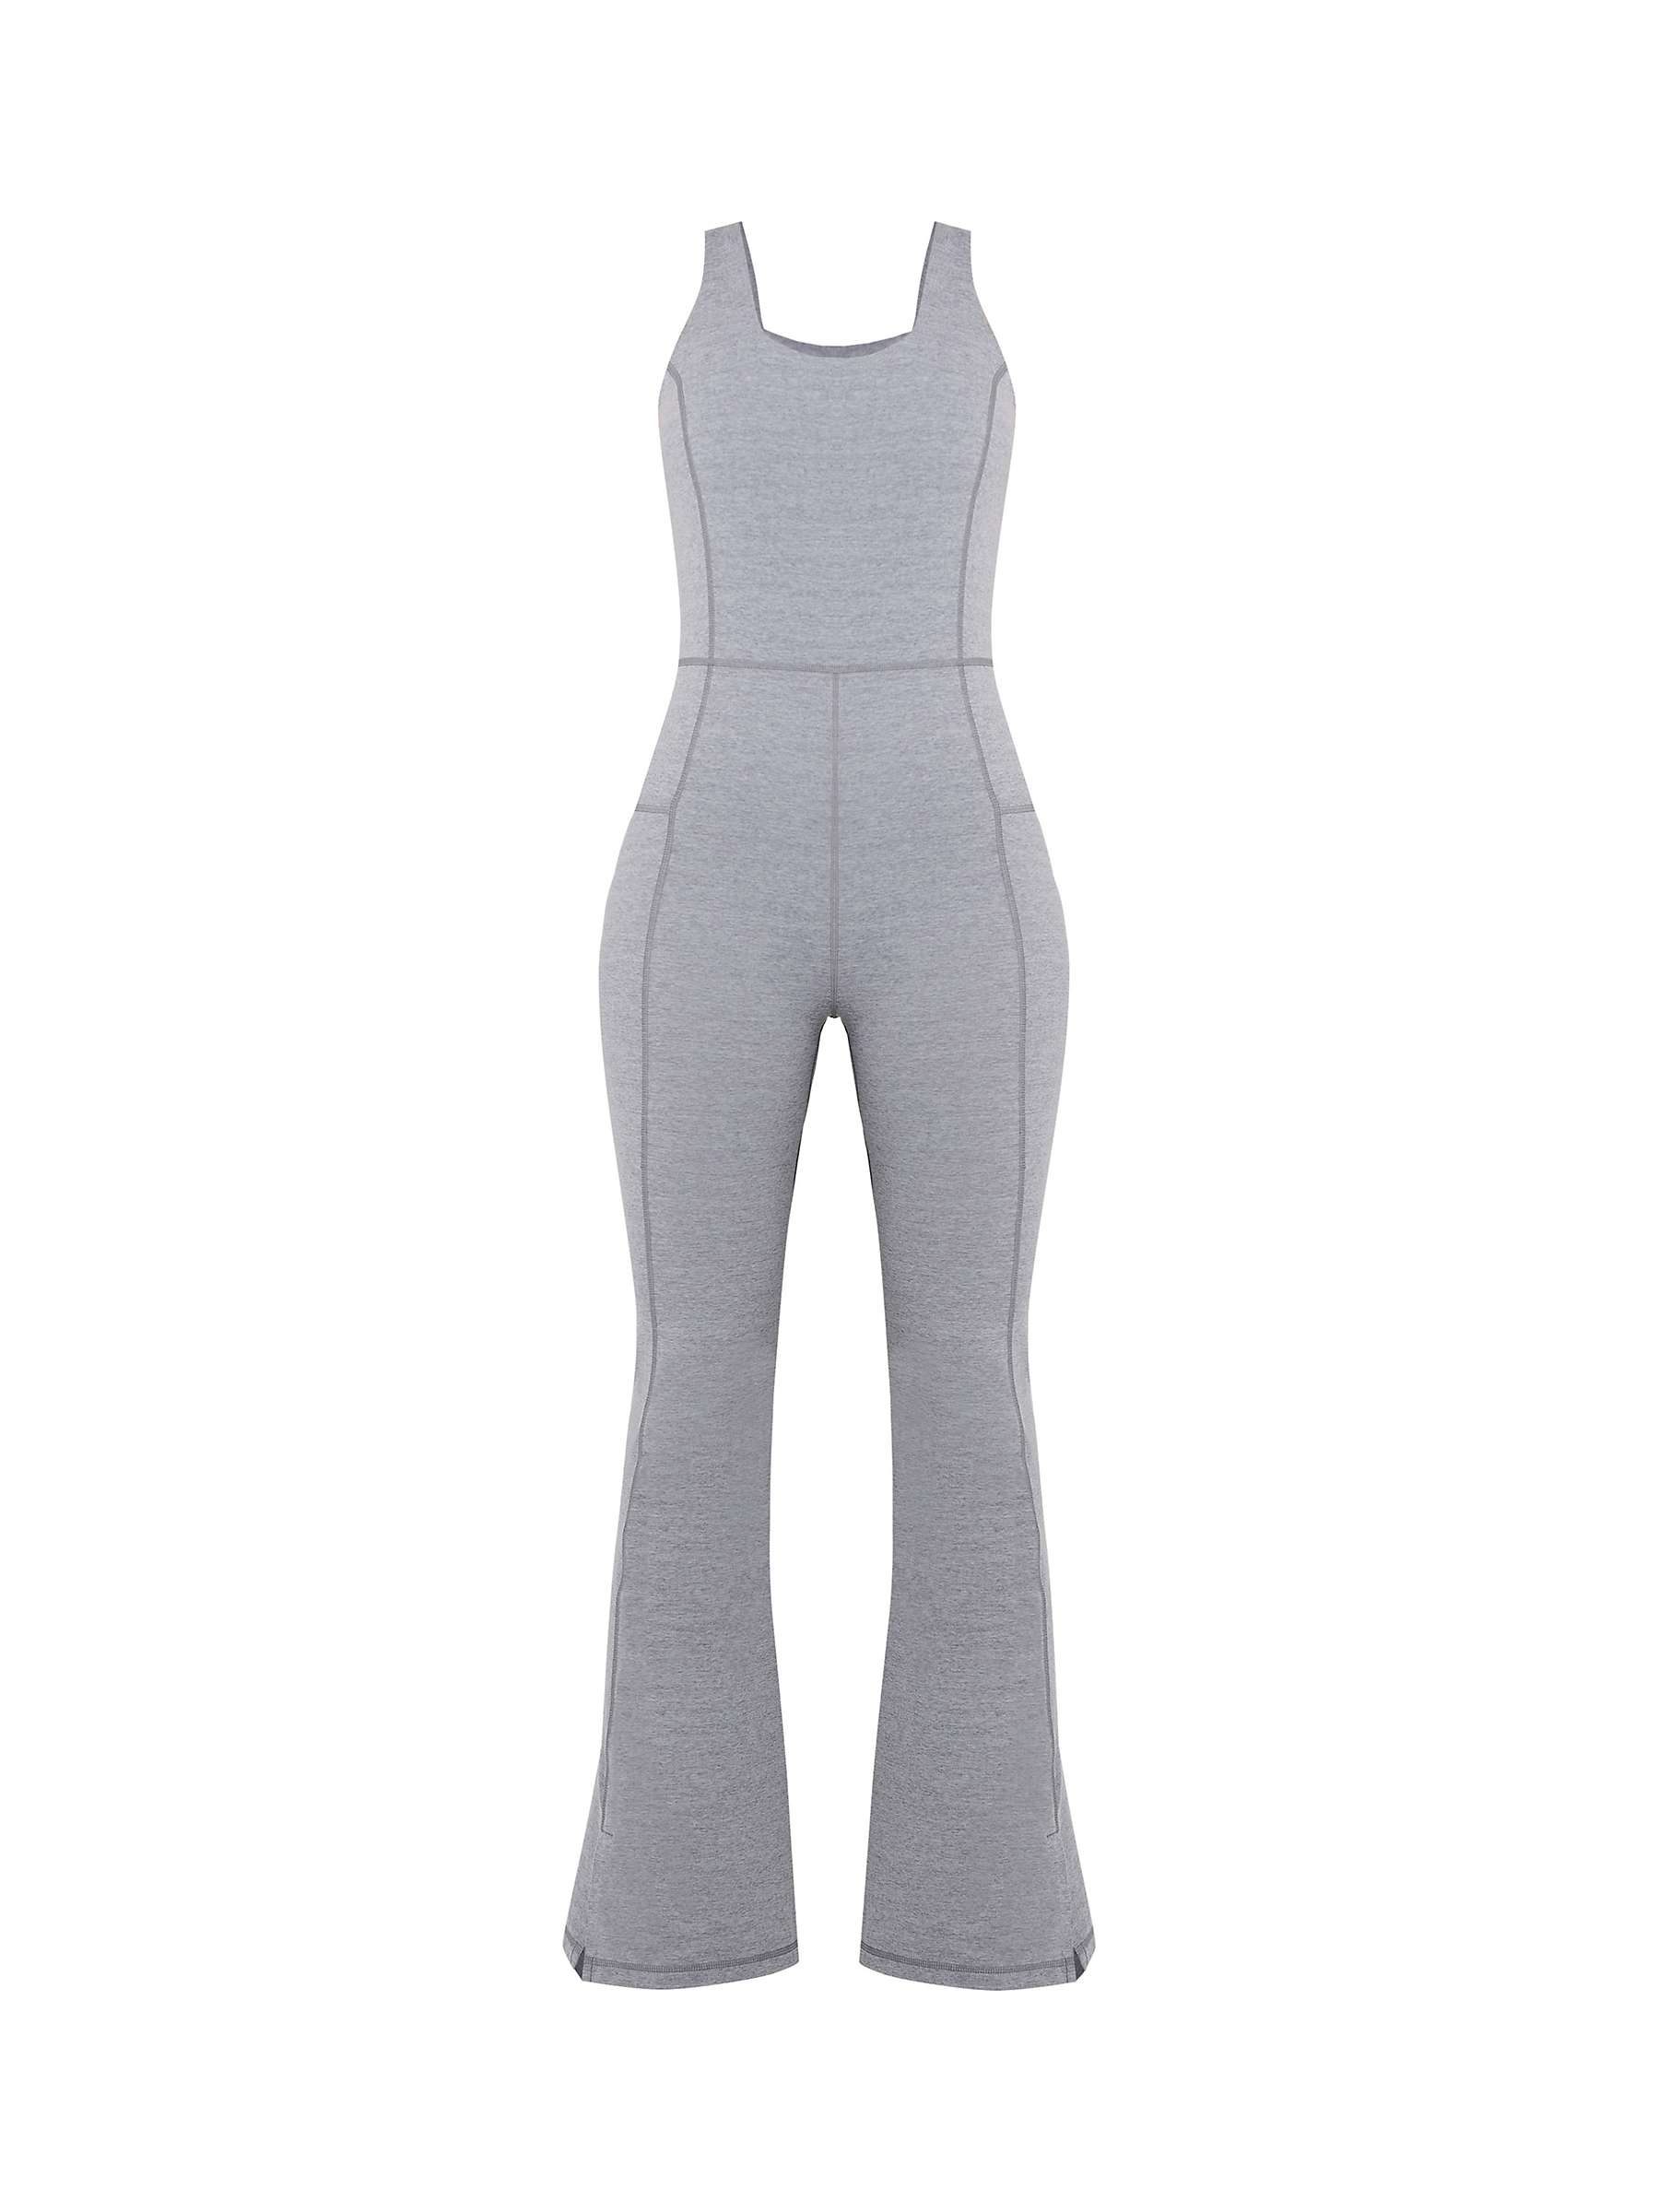 Buy Sweaty Betty Super Soft Flare Jumpsuit, Medium Grey Marl Online at johnlewis.com